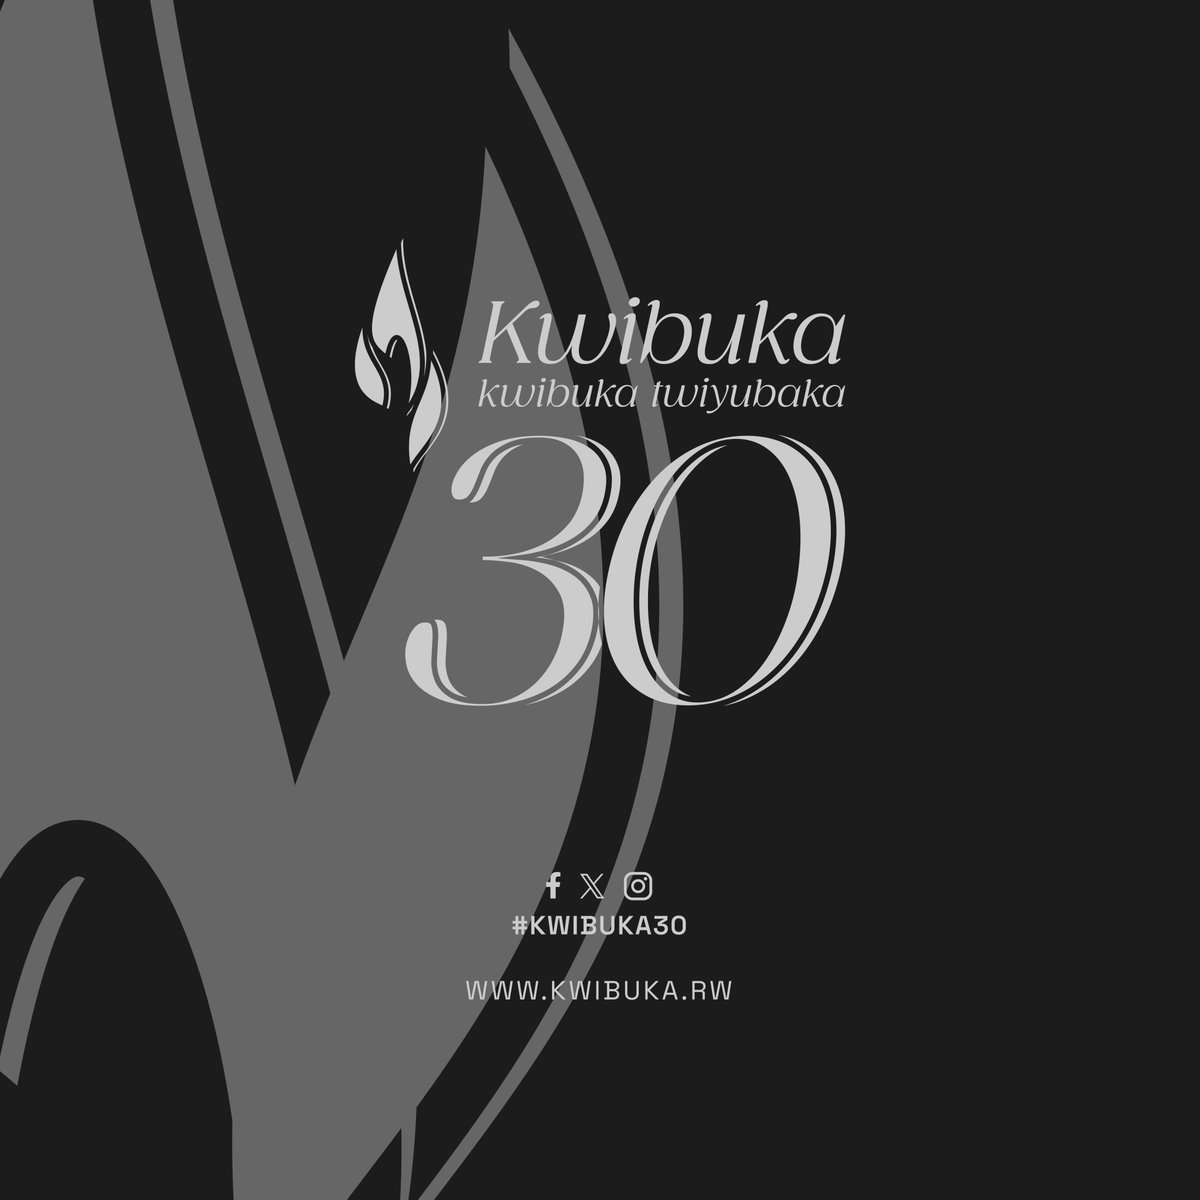 Rwanda Utilities Regulatory Authority (RURA) stands in solidarity with Rwandans in the 30th commemoration of the genocide against the Tutsi. #Kwibuka30